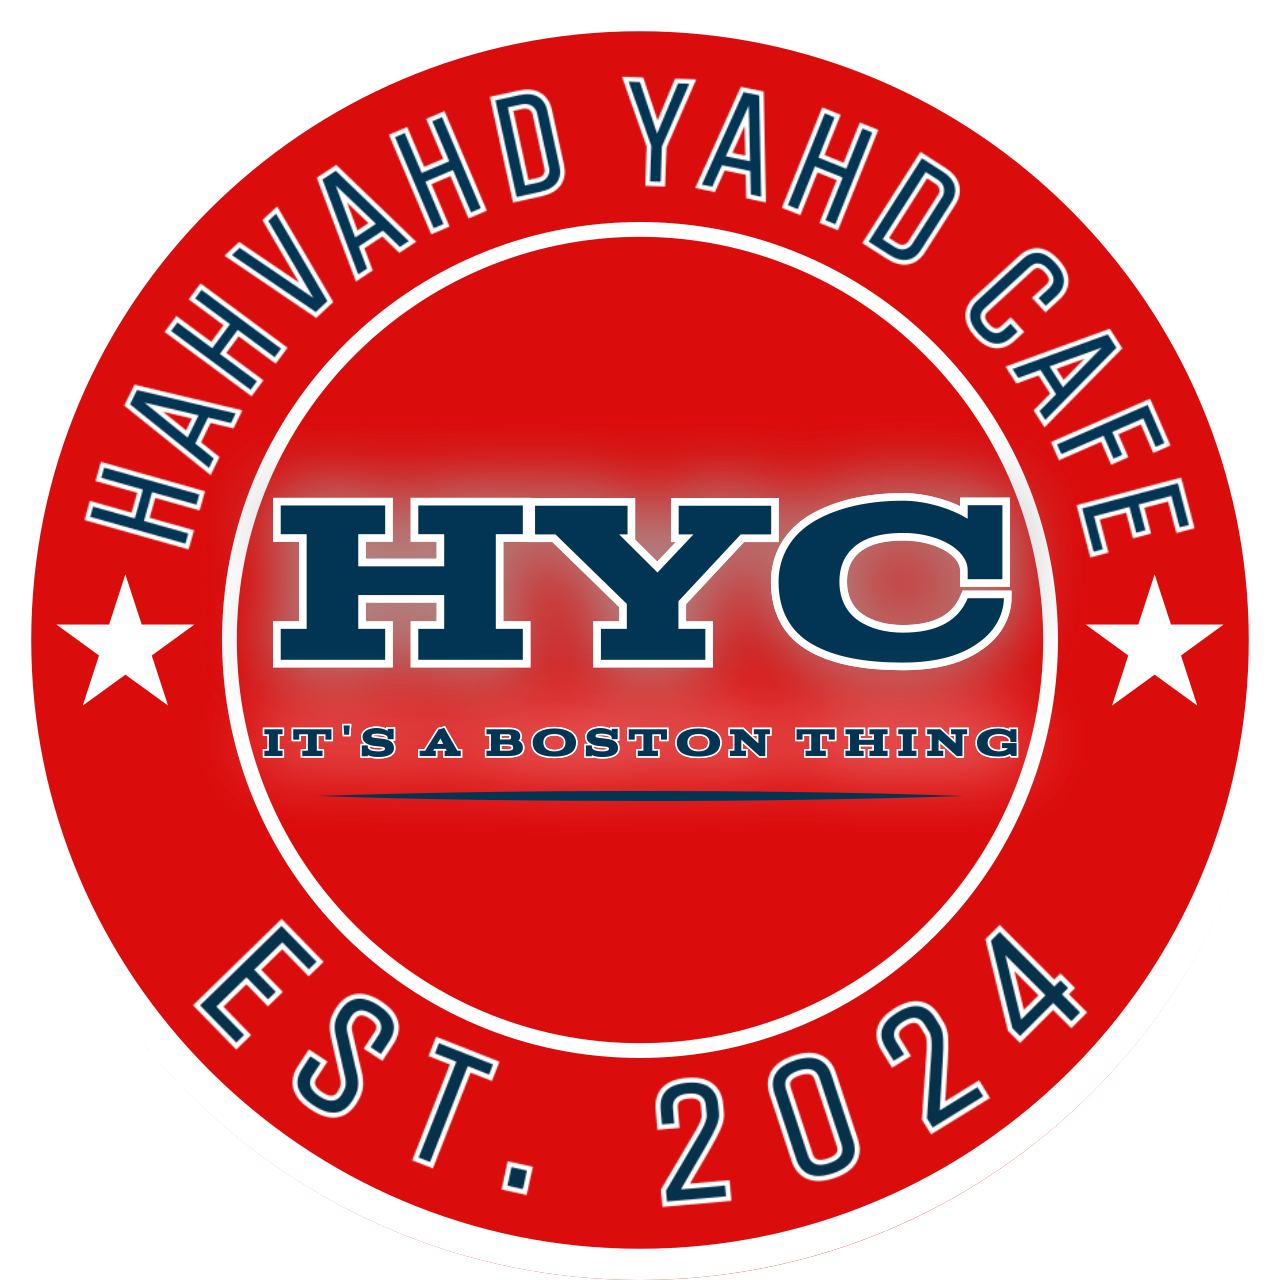 Hahvahd Yahd Cafe